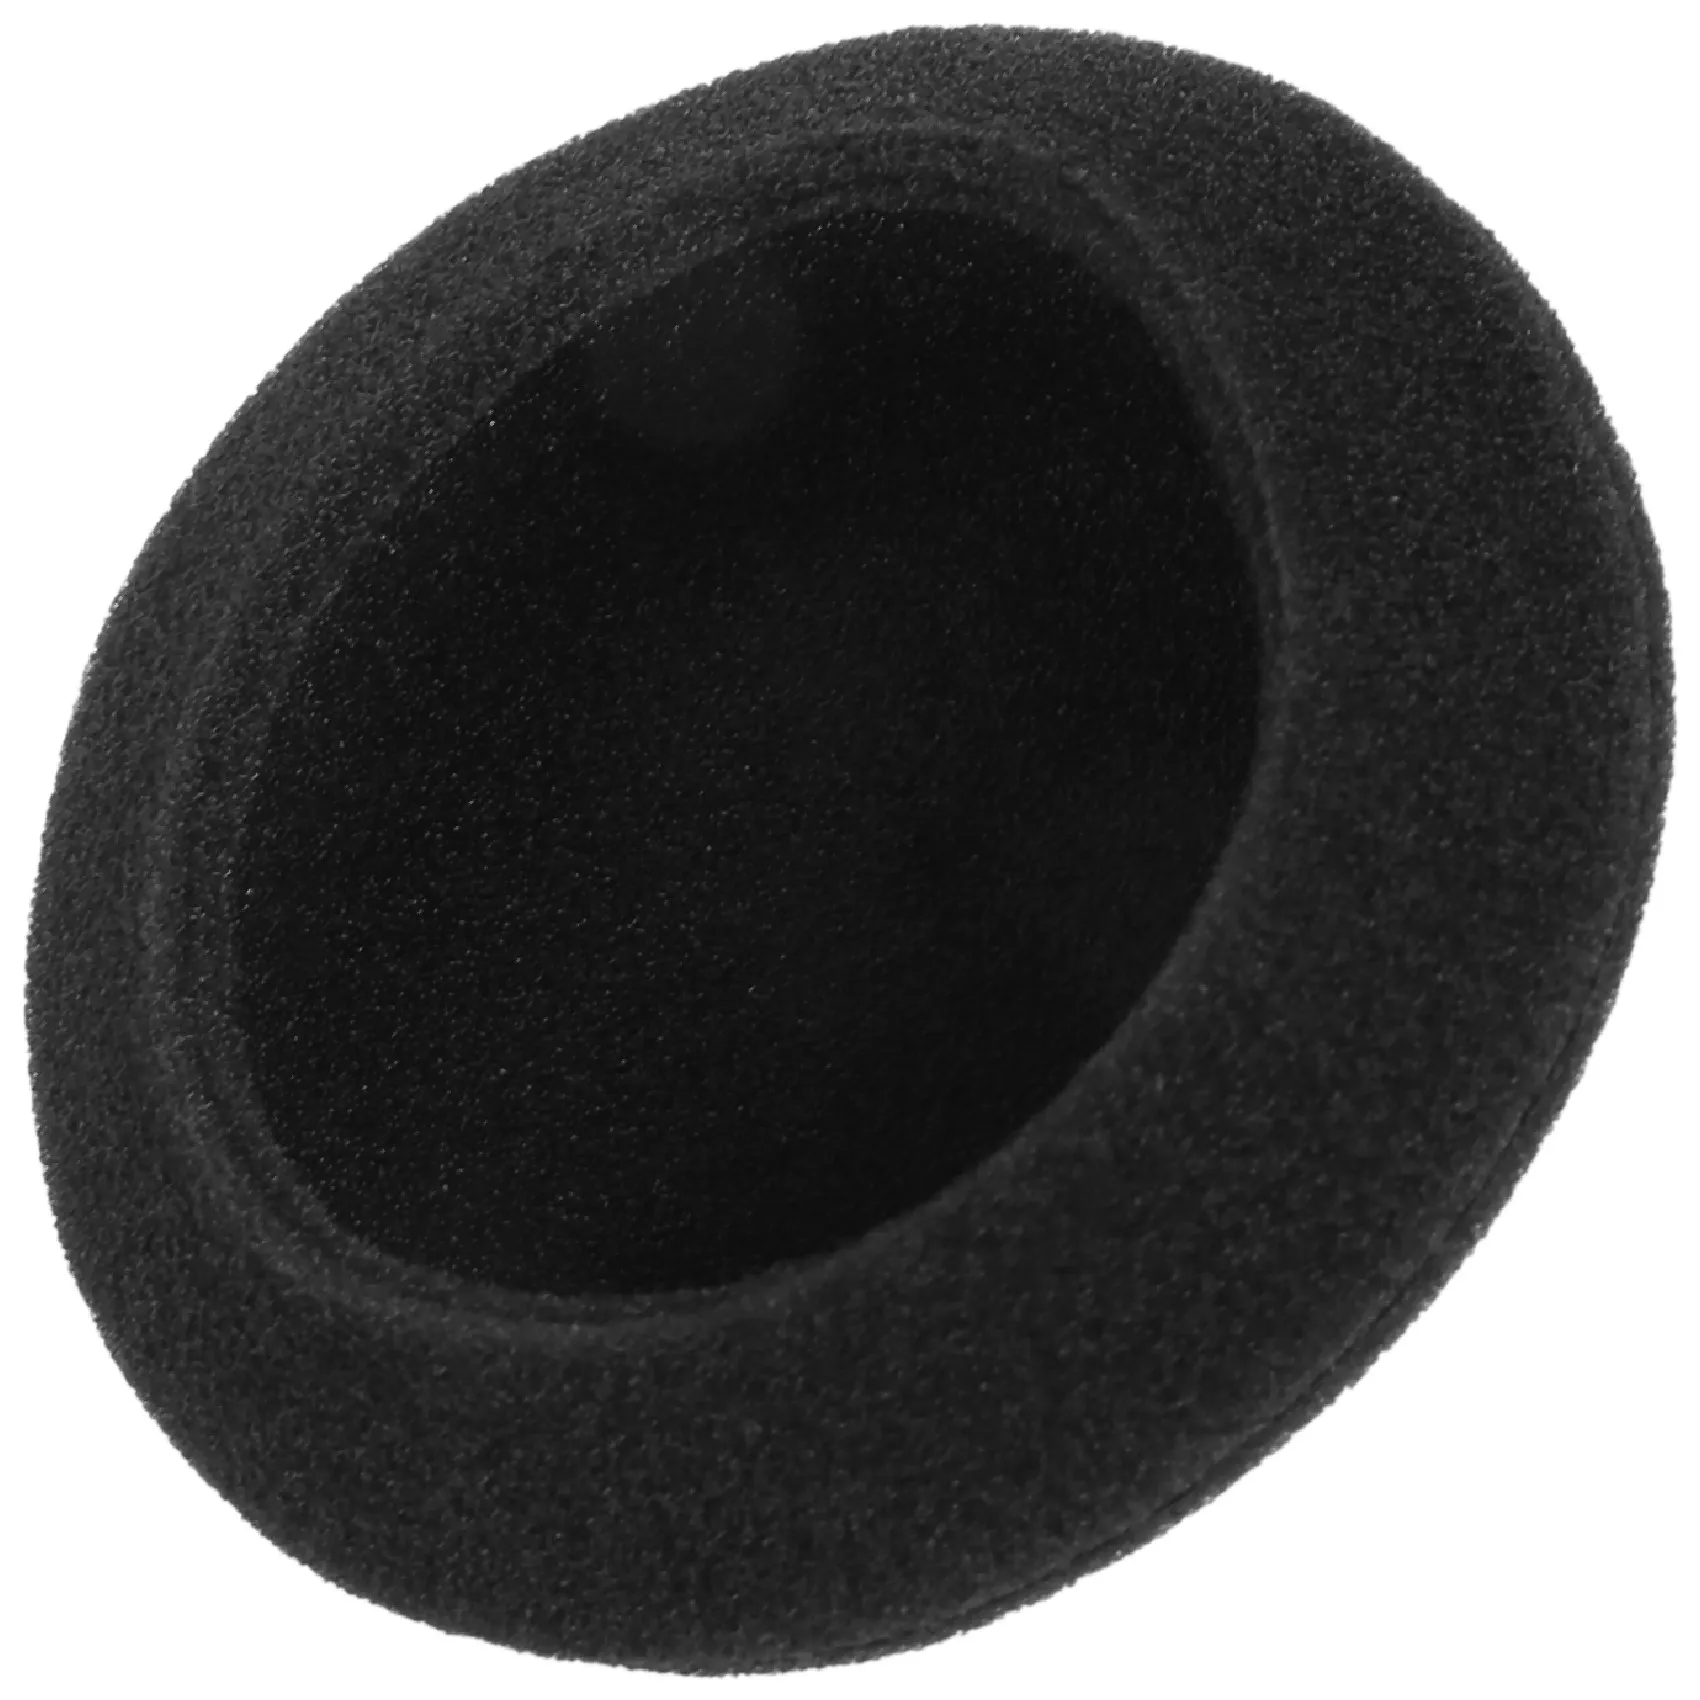 

4 Pair 60mm Replacement Ear Foam Earphone Pad Covers for Headset Headphone Black